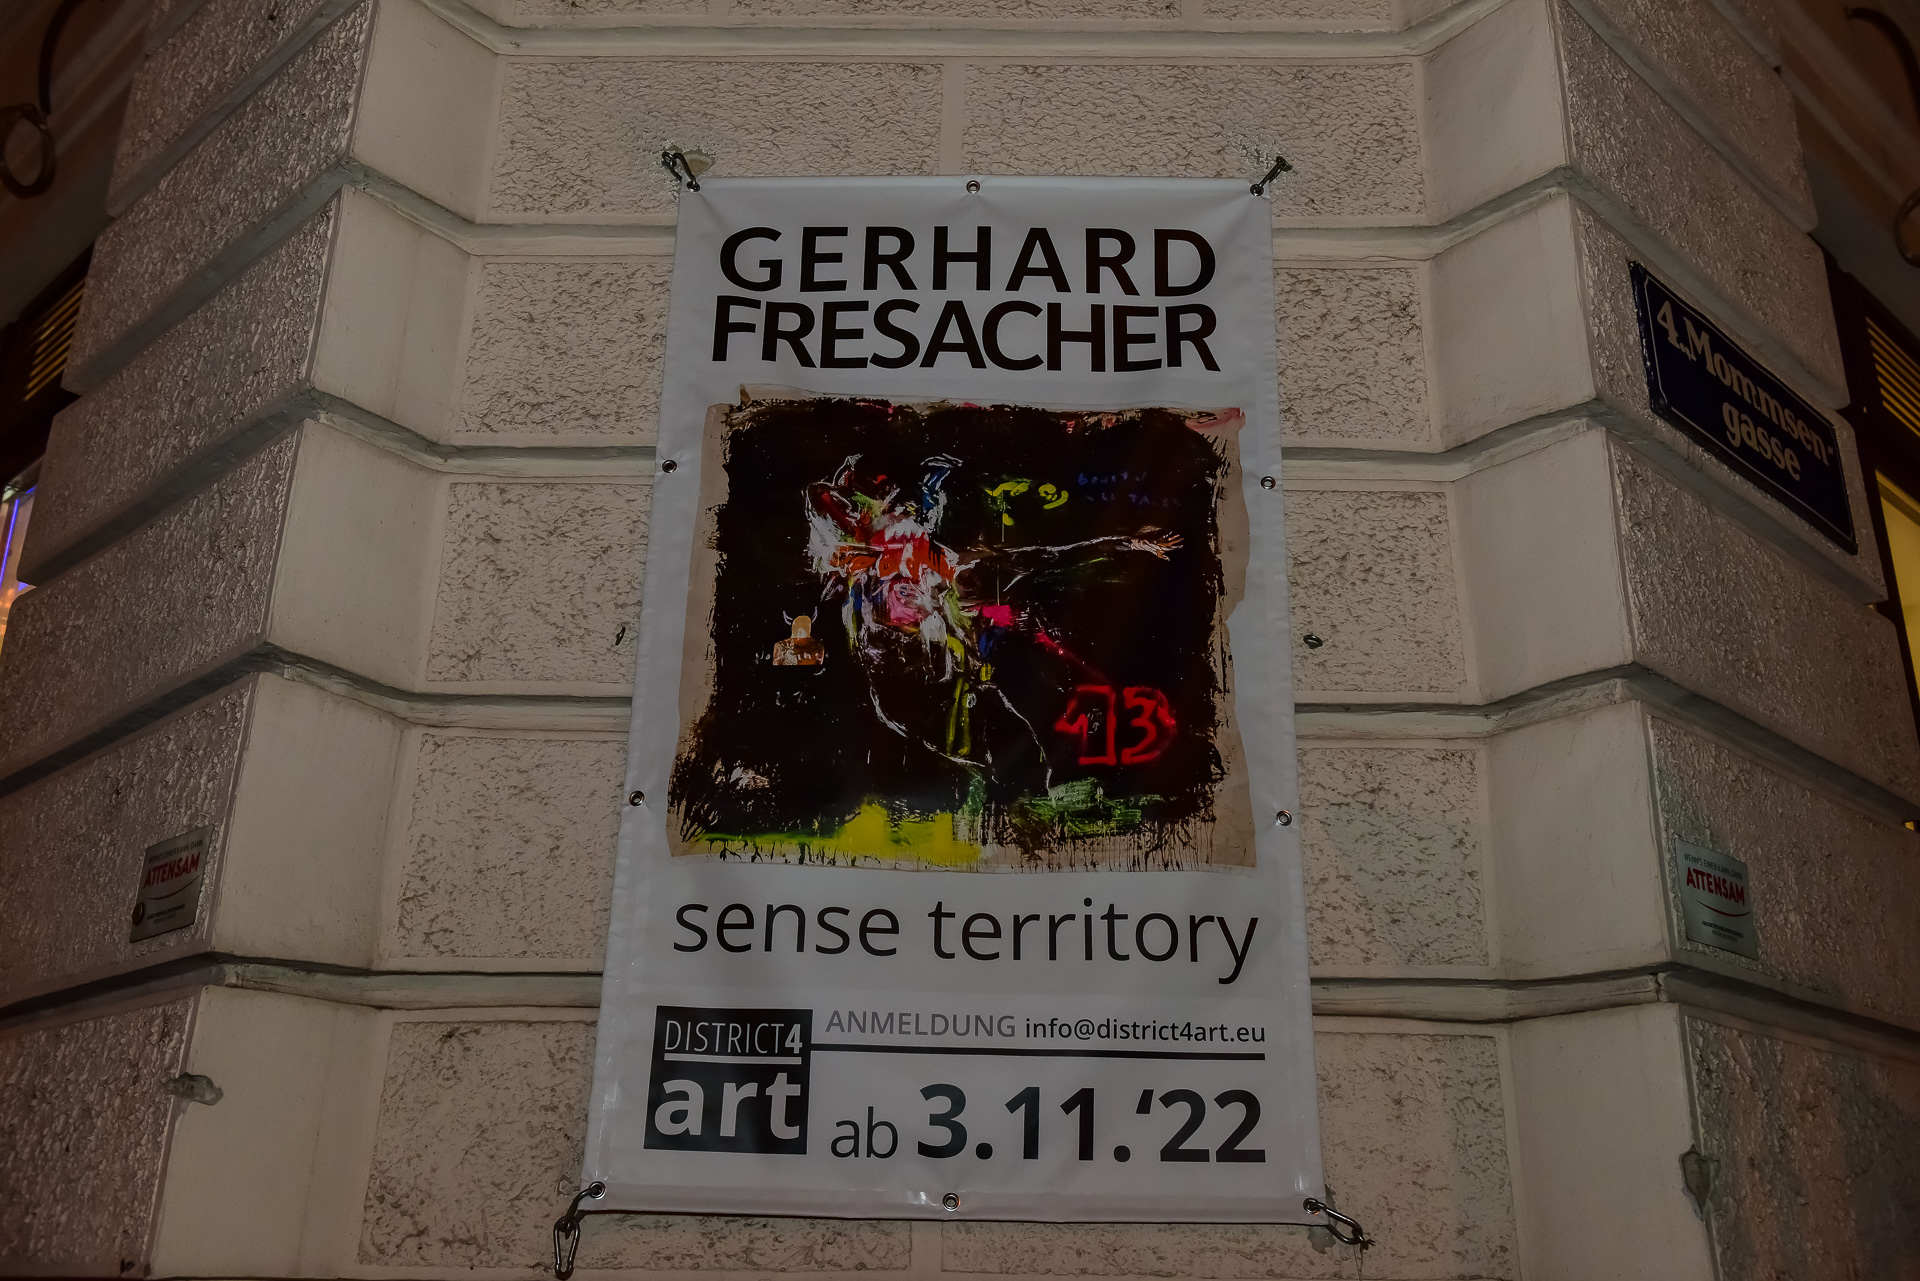 Gerhard Fresacher - sense territory